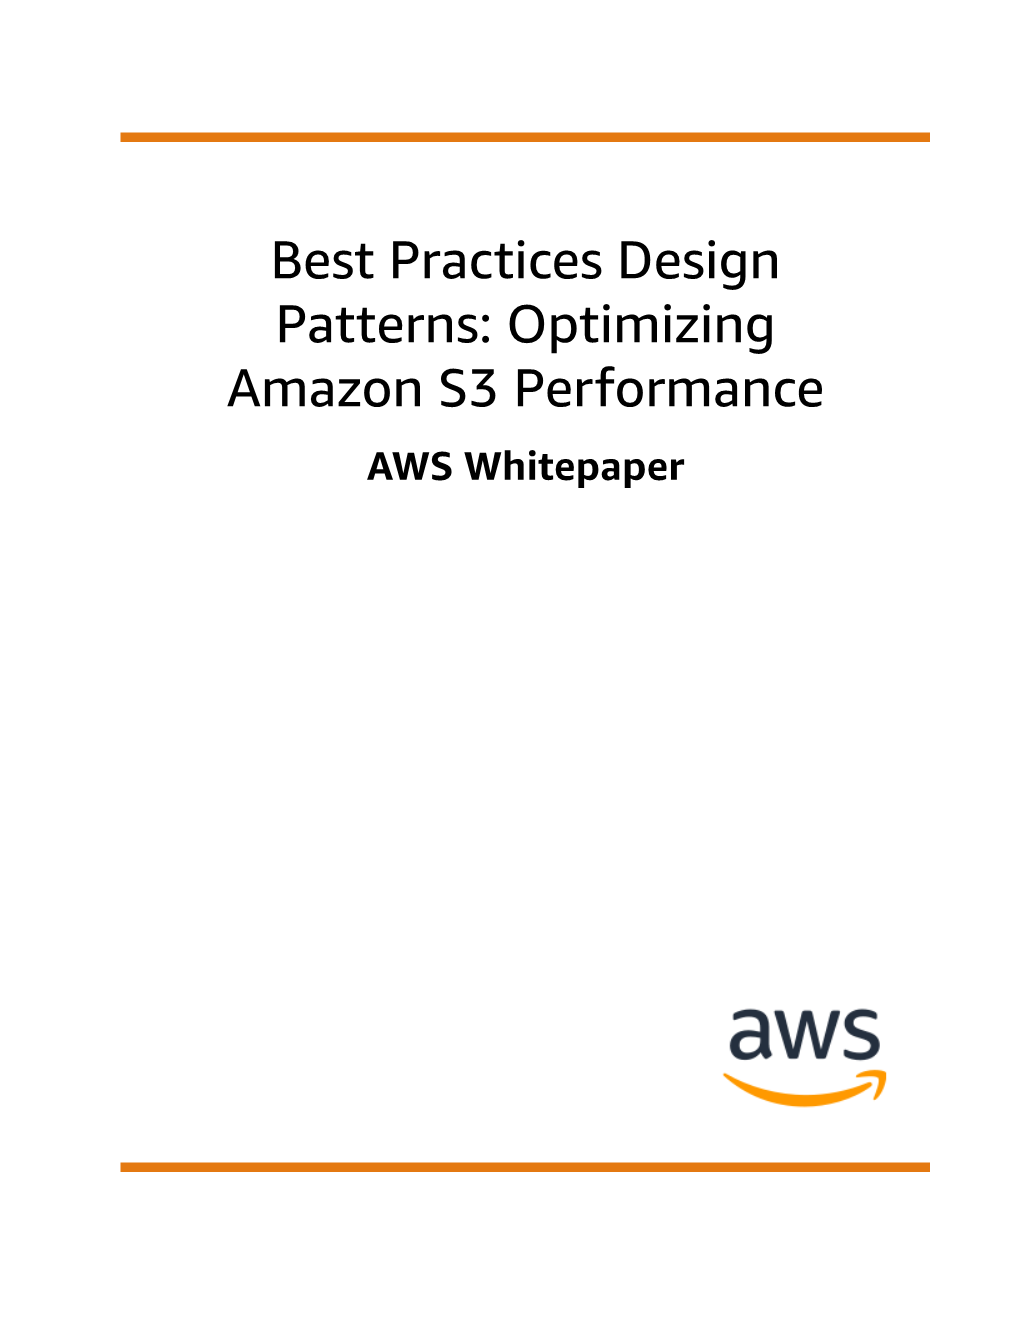 Optimizing Amazon S3 Performance AWS Whitepaper Best Practices Design Patterns: Optimizing Amazon S3 Performance AWS Whitepaper